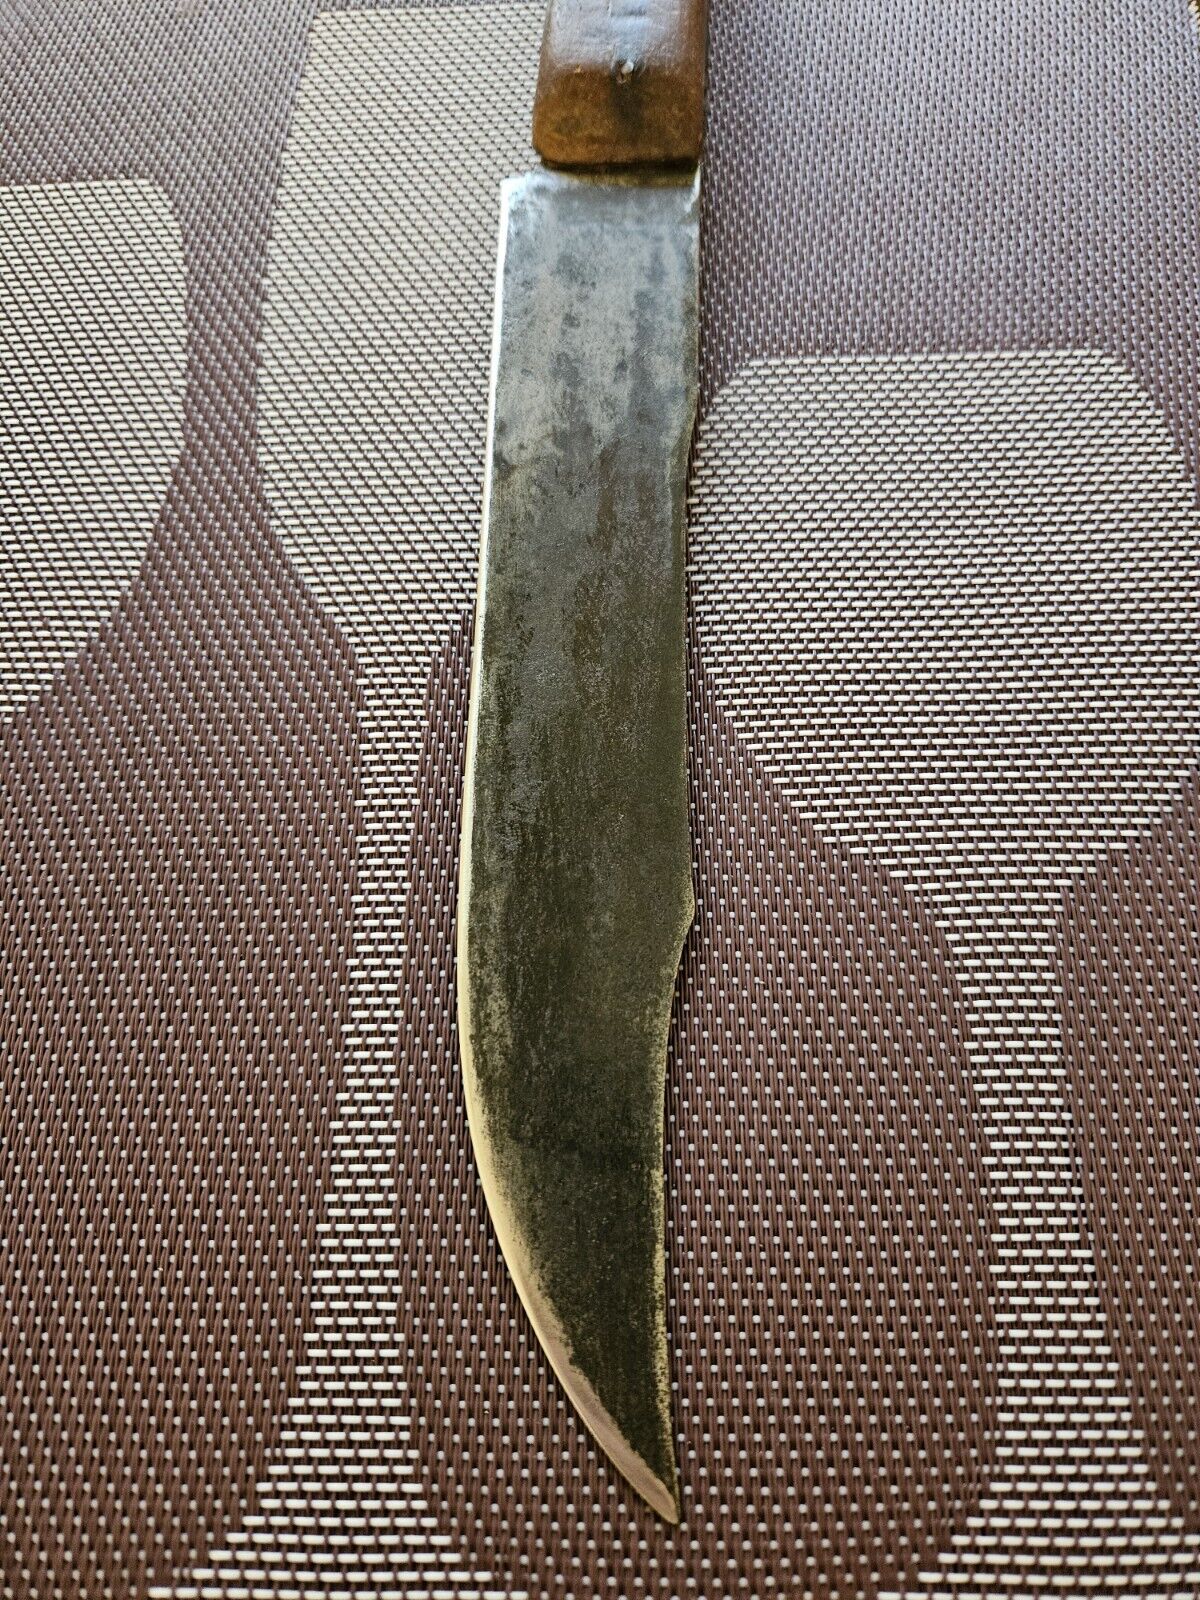 Restored Antique Bowie Hunter's Knife Handle Handmade 